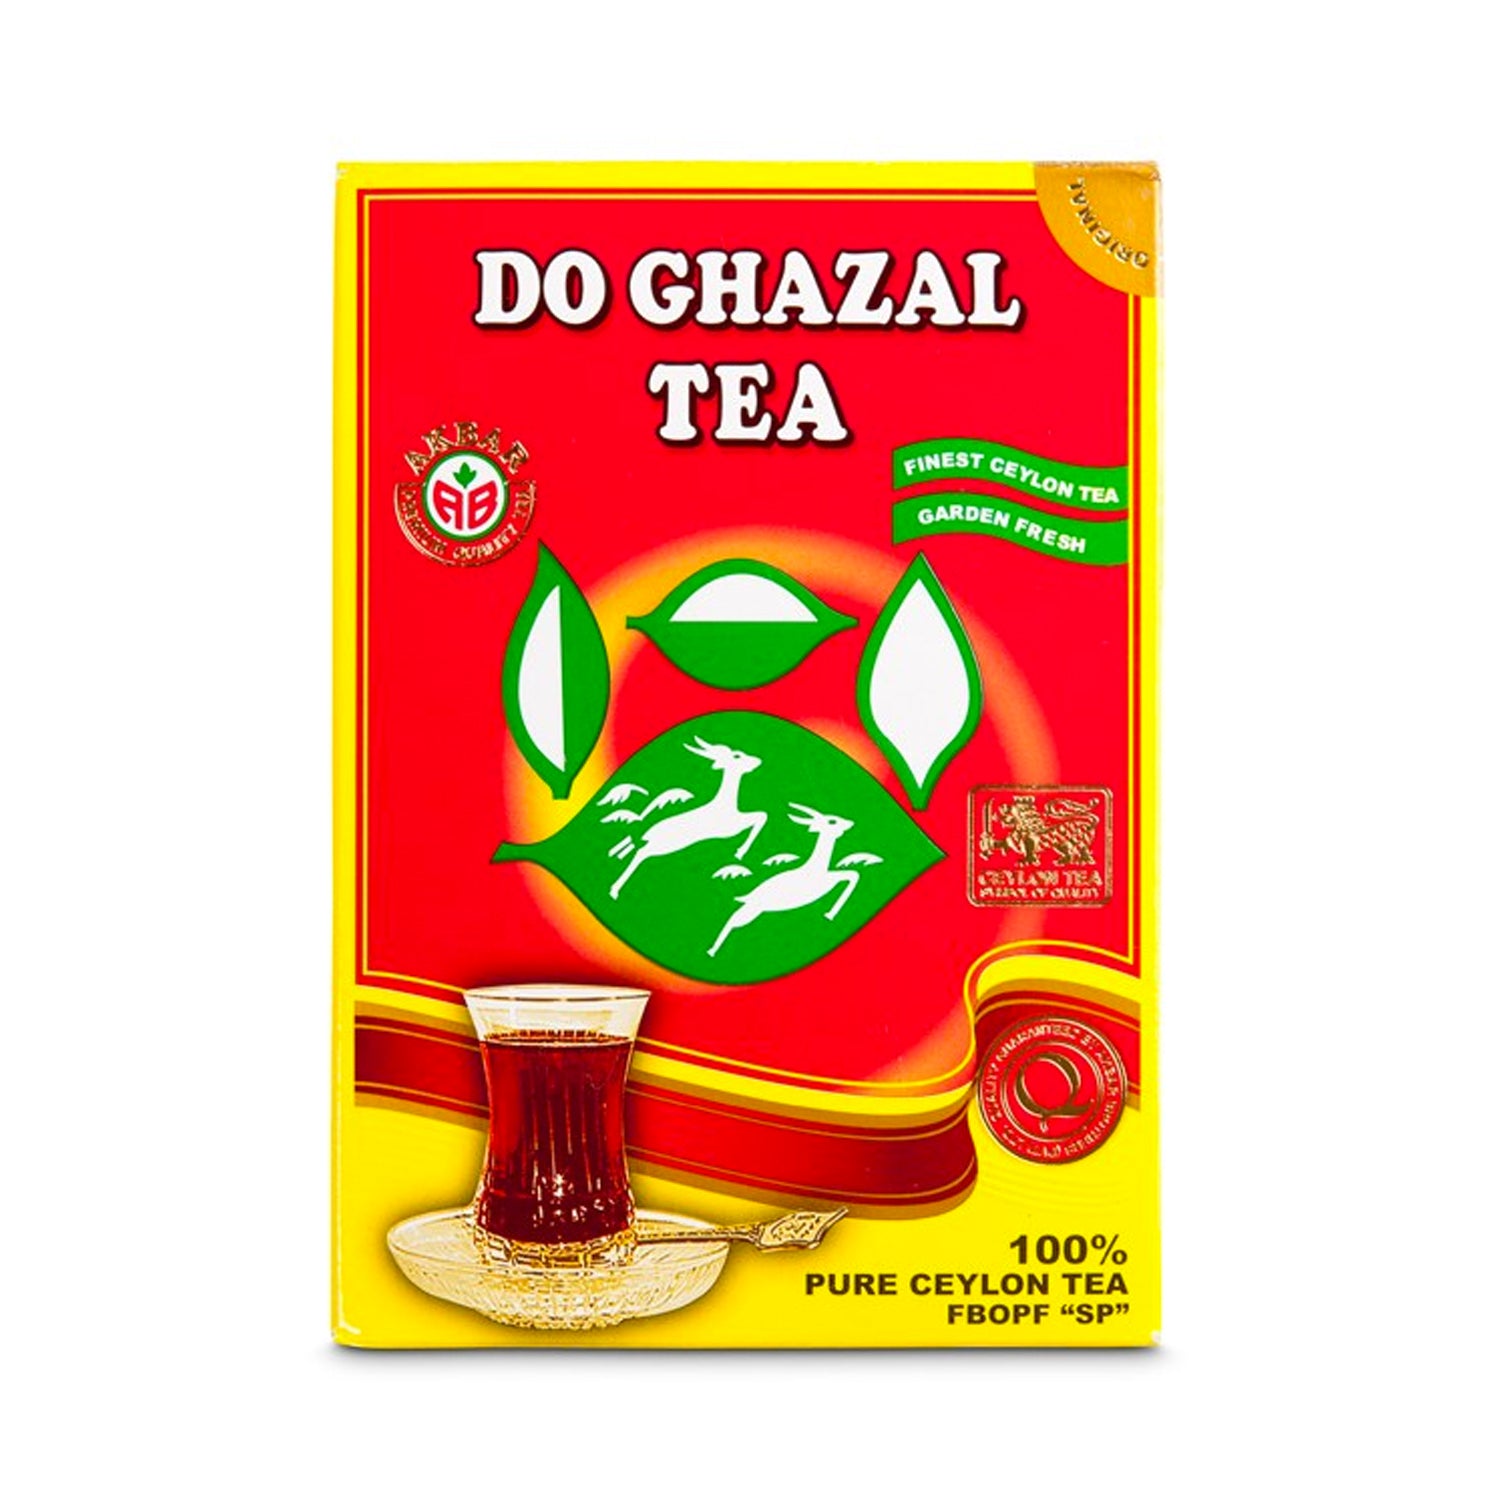 DO GHAZAL RED PERSIAN TEA 24/454g